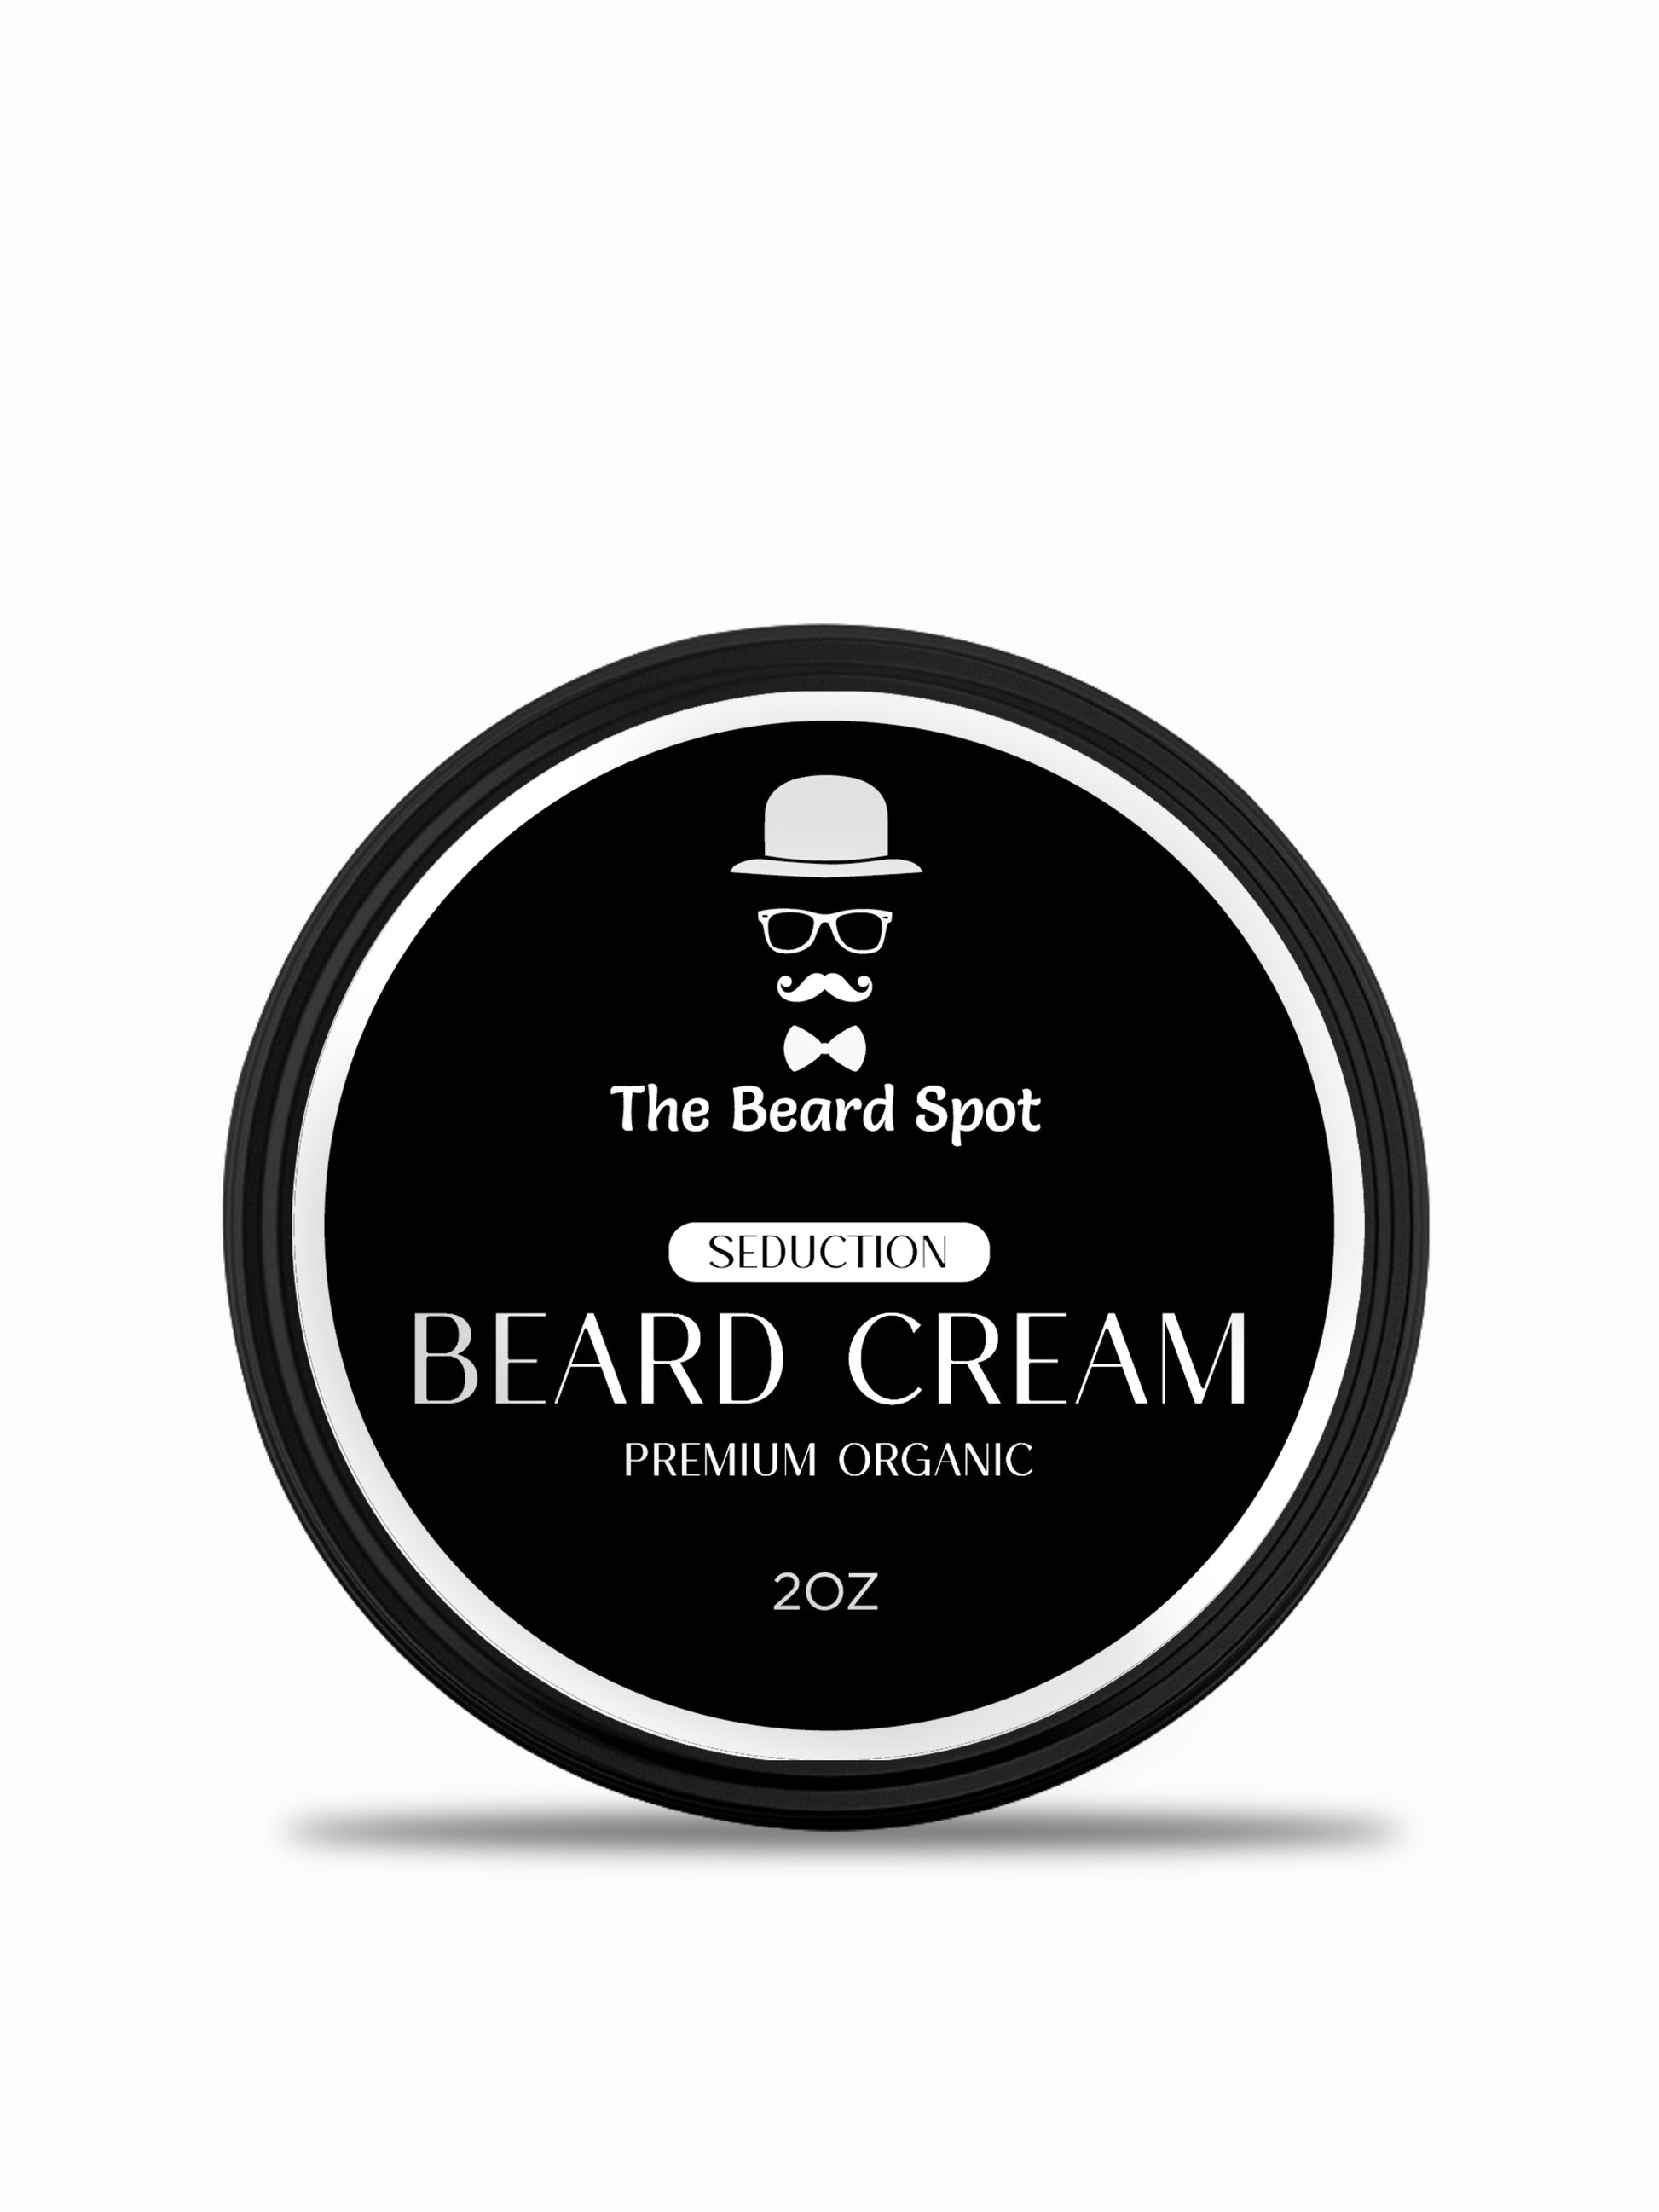 Beard Oil, Beard cream, Beard Balm, Organic Beard Oil, Organic Beard Balm, Organic Beard Cream, Beard Growth, Beard care, Grow beard, Beard grooming kits, Beard kit, Beard oil scents, Best beard products, Beard maintenance, Premium beard essentials, Organic beard care, Beard styling, Beard styling products, Beard accessories, Beard perfection, Ultimate beard care, Professional beard care, Beard nourishing solutions, Top-rated beard care, Men's grooming products